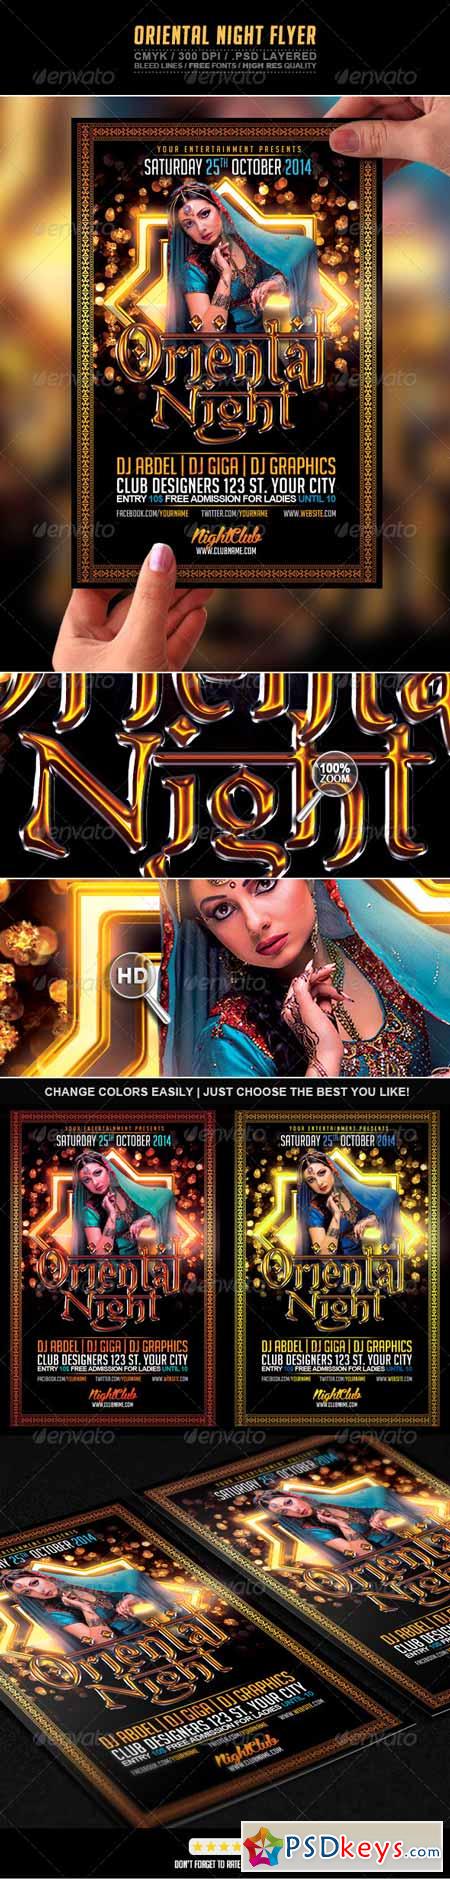 Oriental Night Flyer PSD Template 7143273